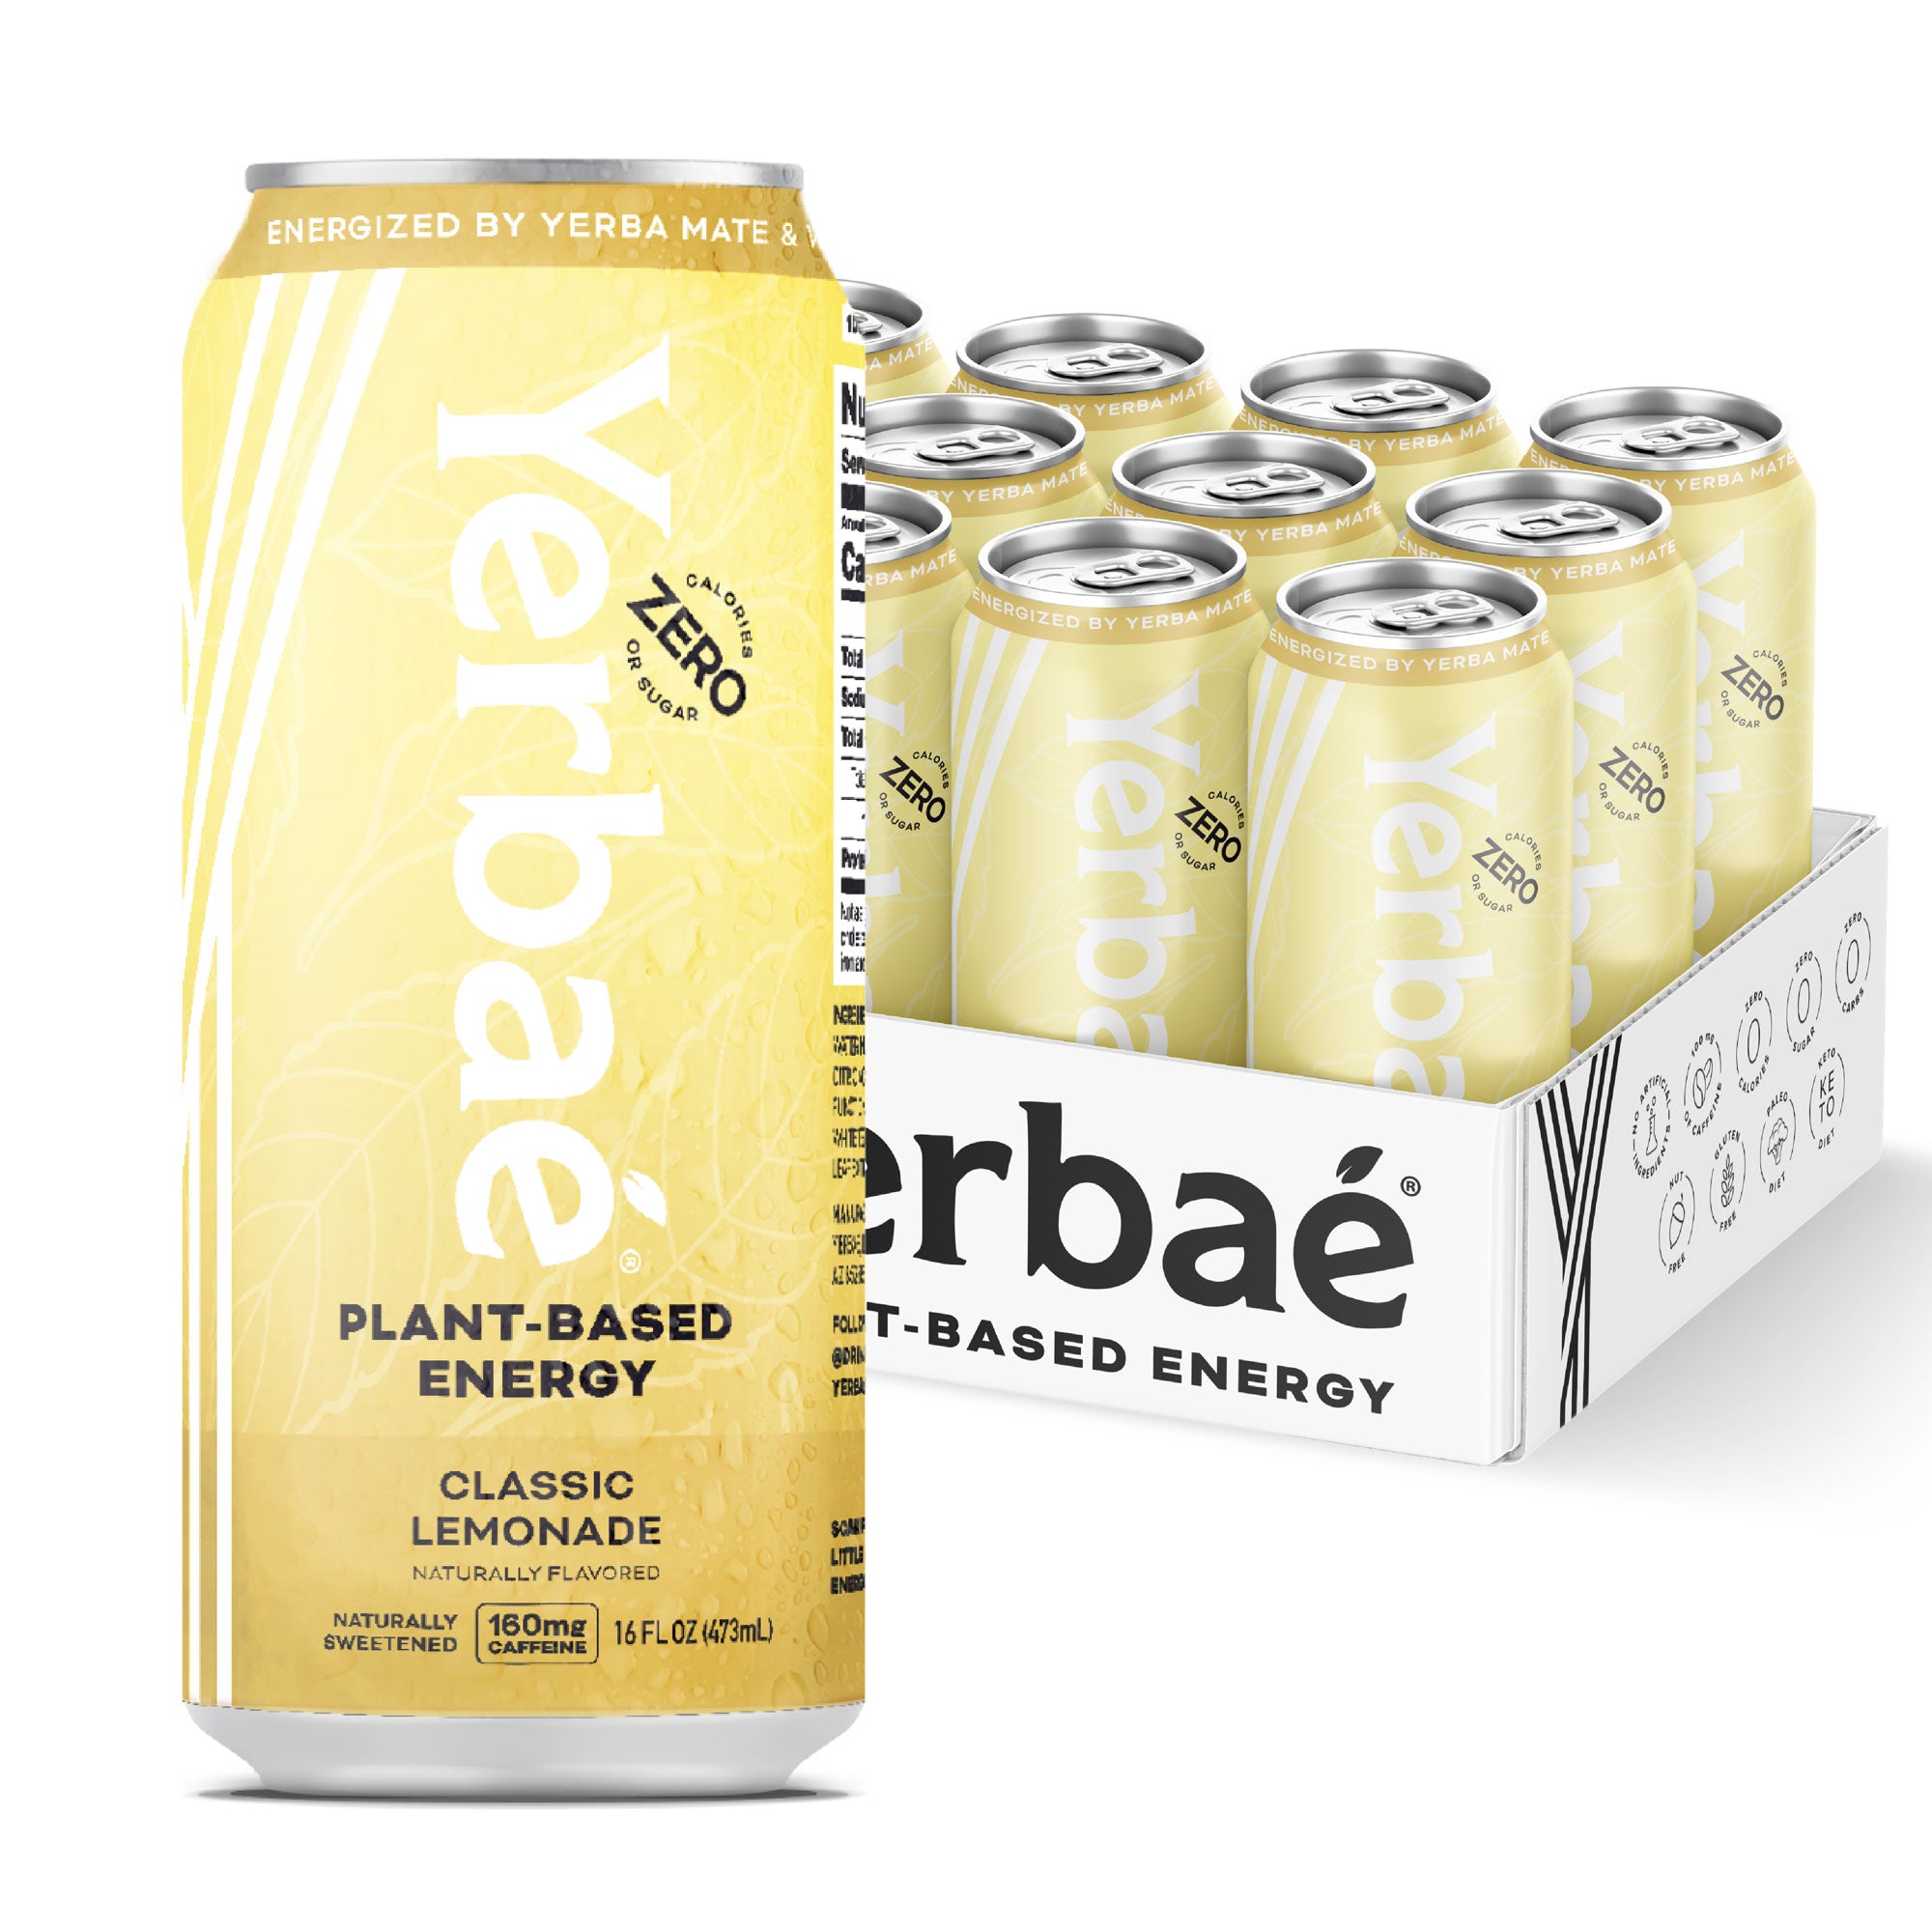 Lemonade & Tea Yerba Mate Drink, Natural Caffeine